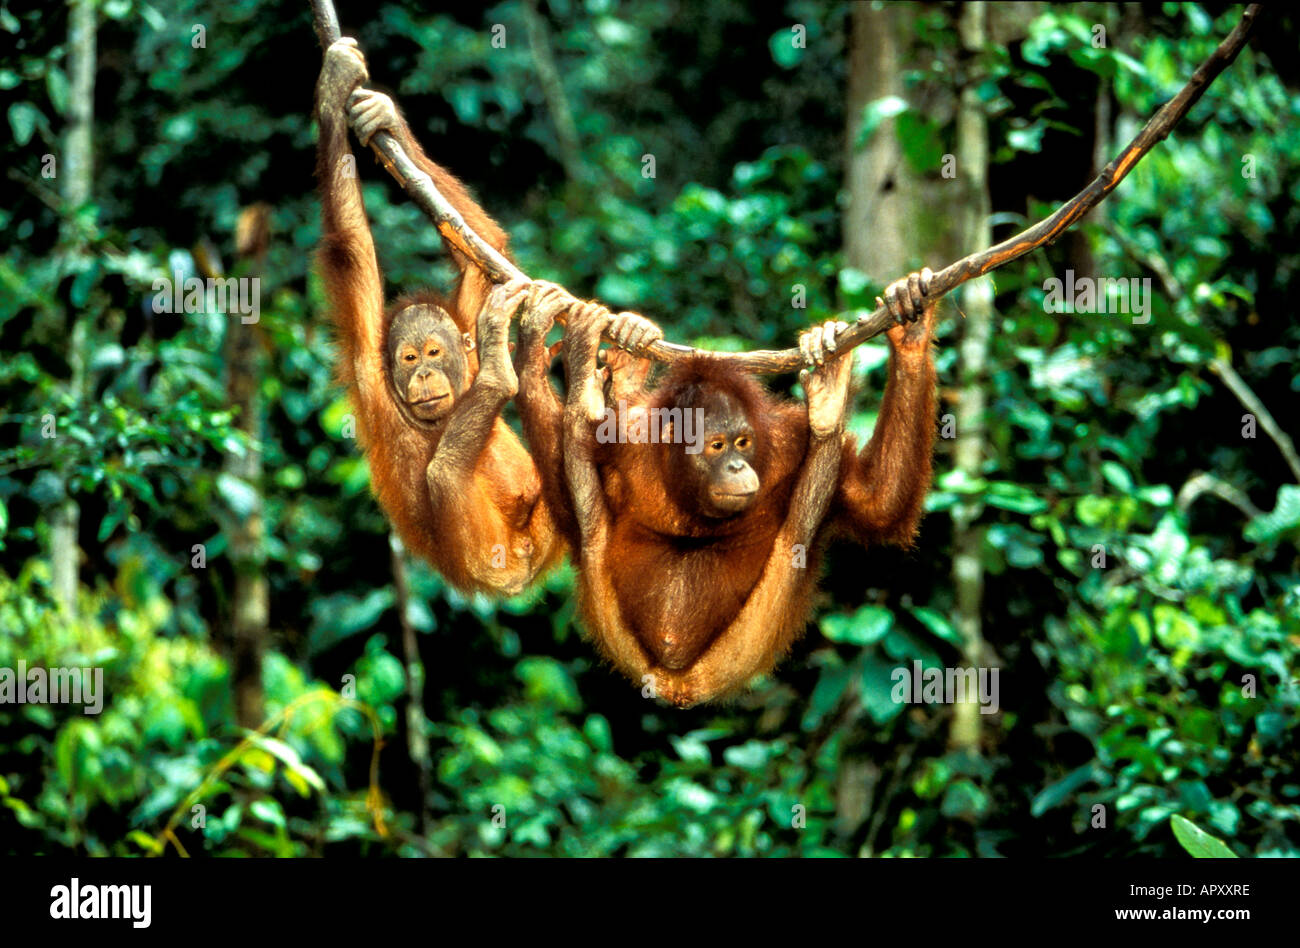 Orang-Utan, Pongo pygmaeus, parc national de Gunung Leuser, Sumatra, Indonésie, Asie Banque D'Images